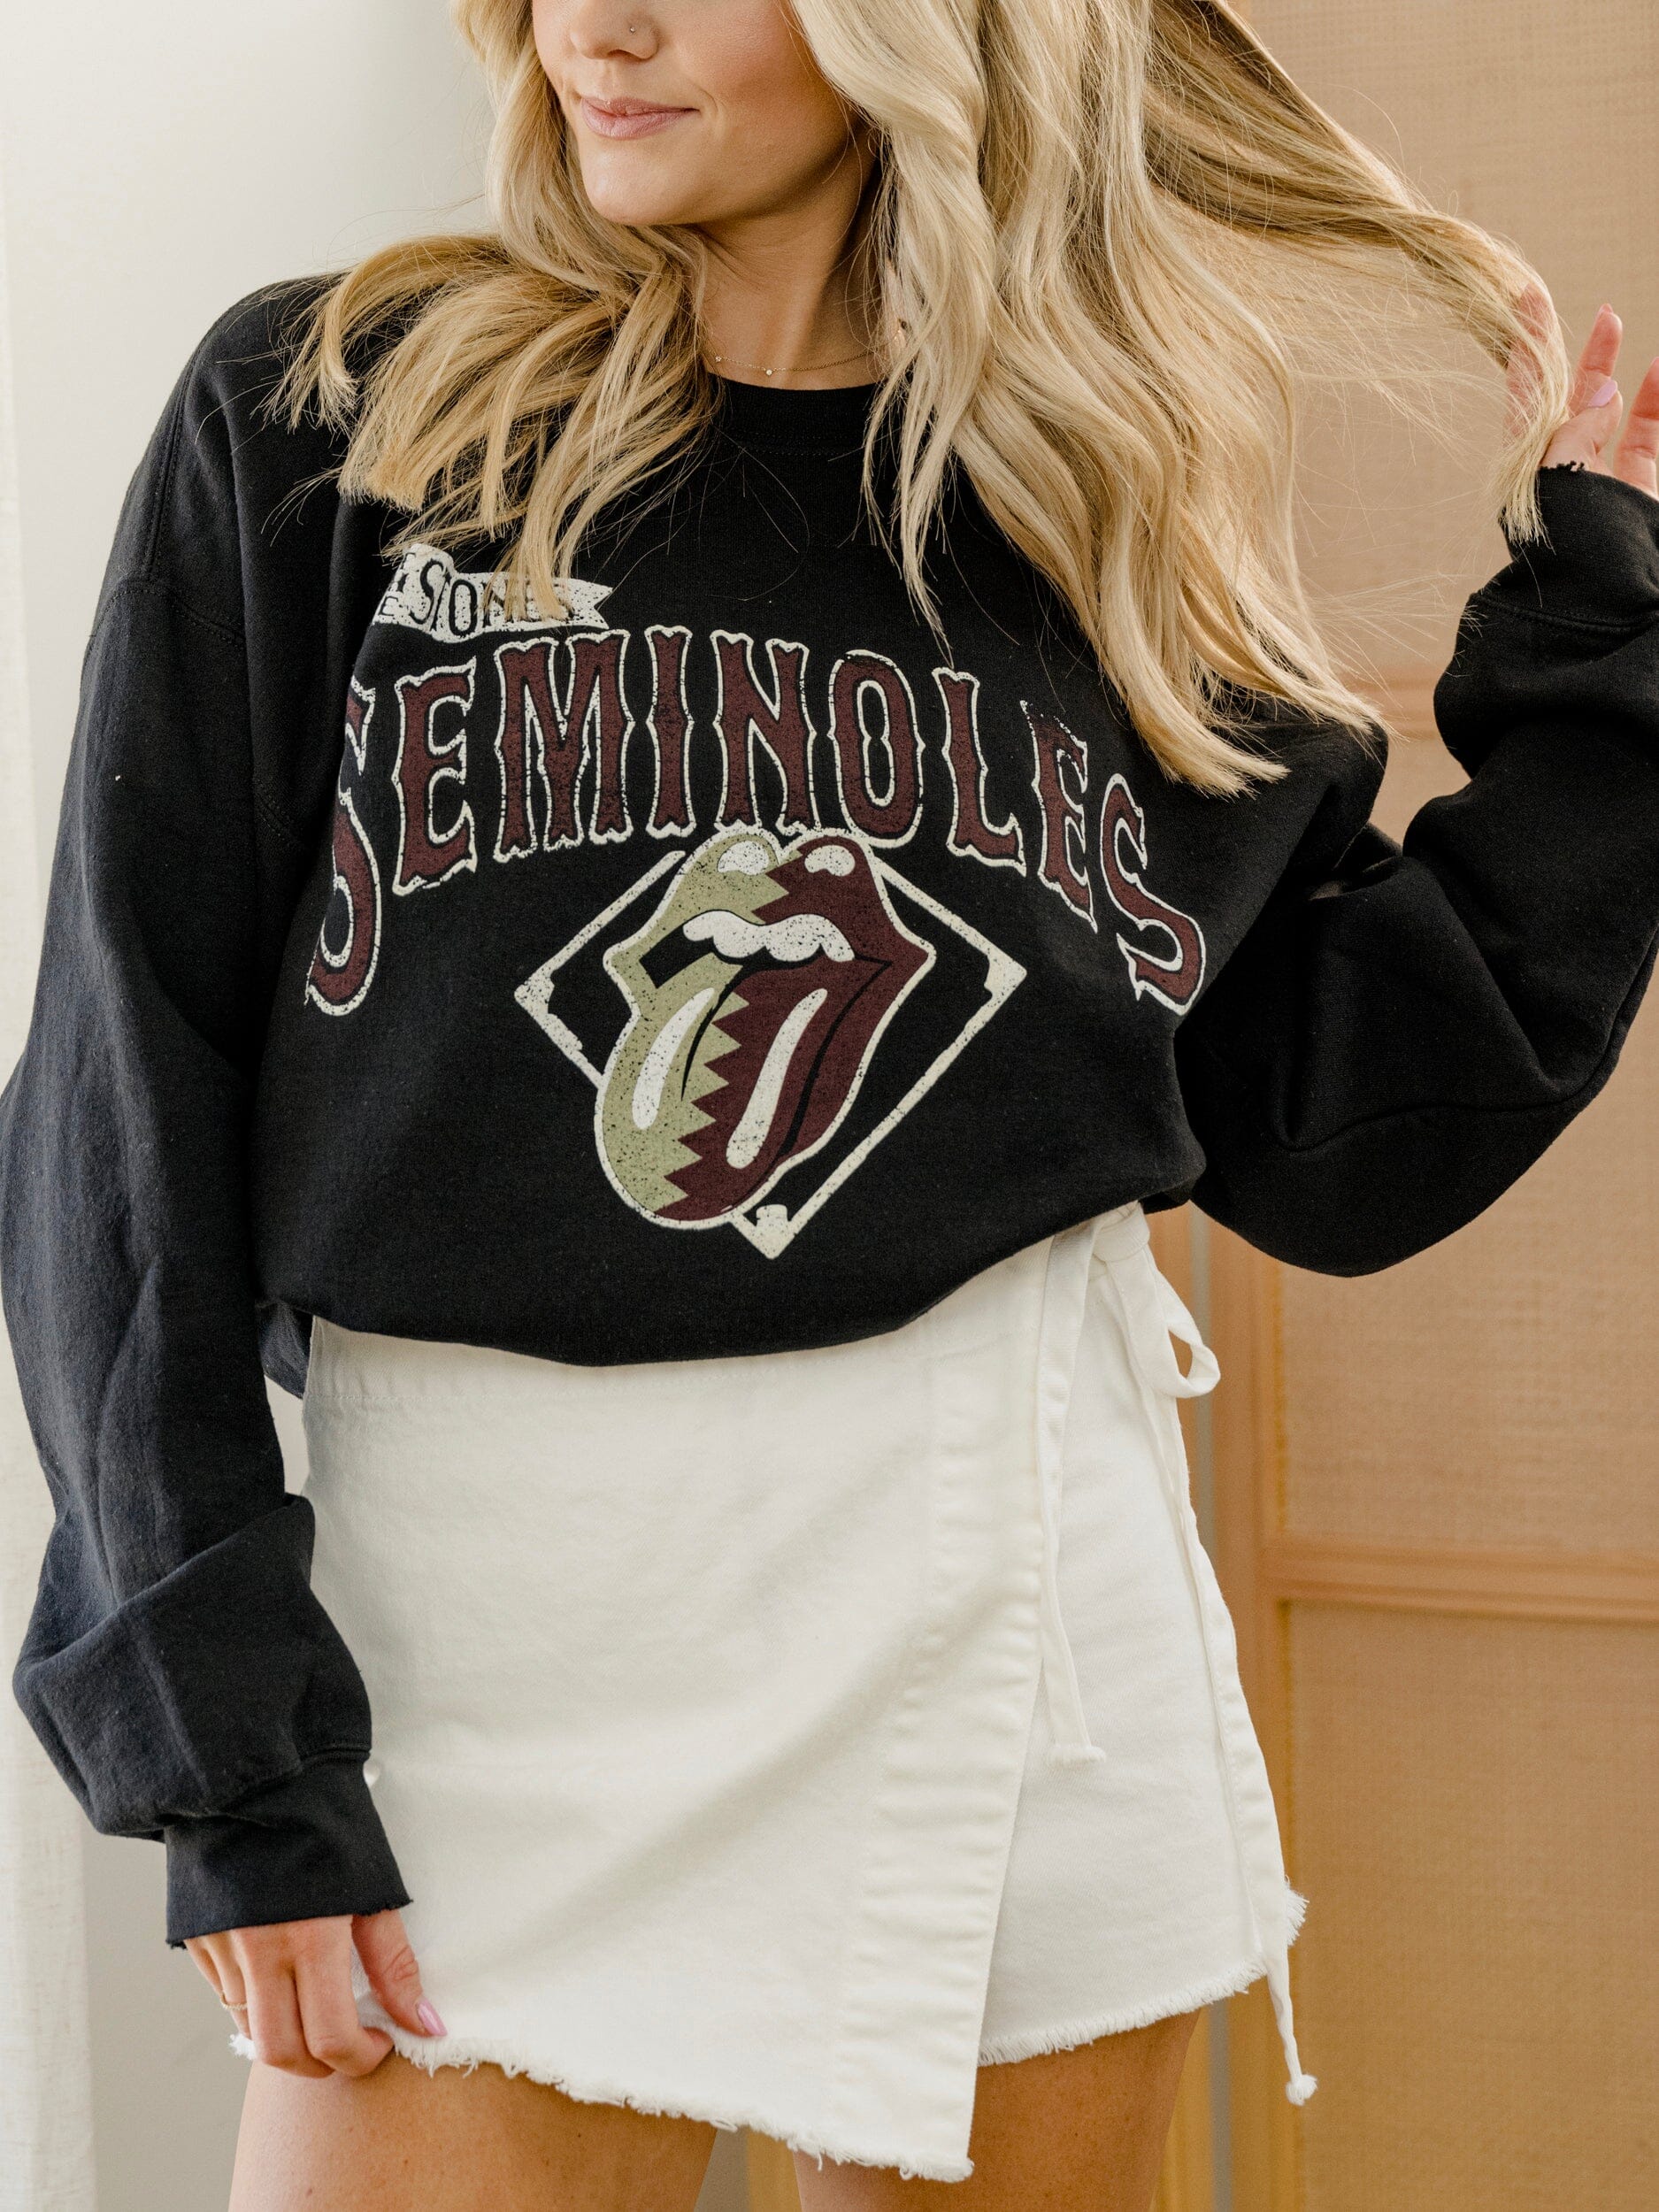 Rolling Stones FSU Seminoles Baseball Diamond Black Thrifted Sweatshirt